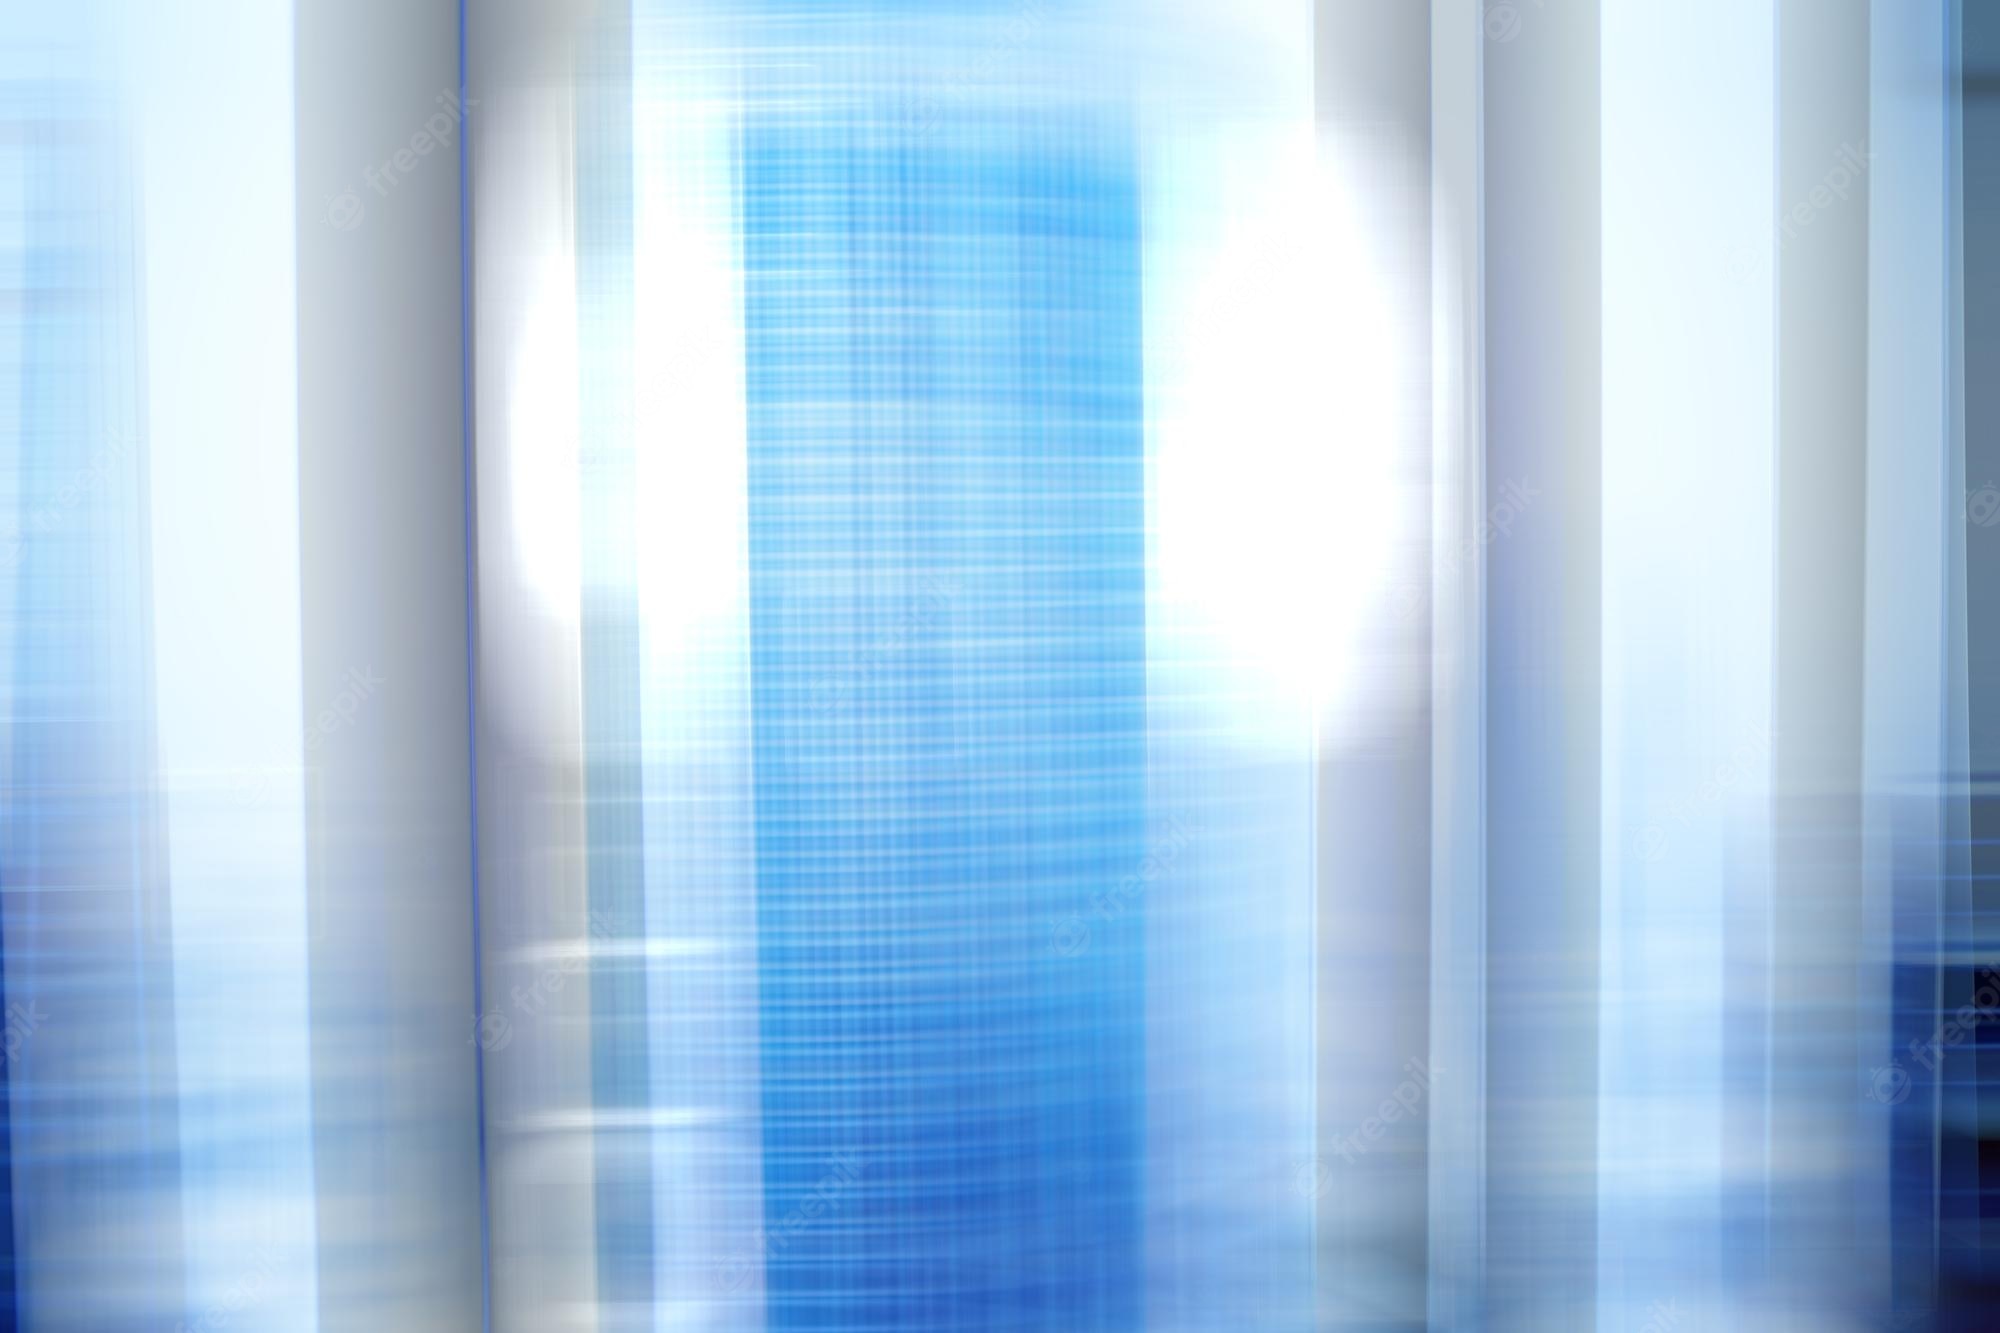 Blurred Lines Blue Background